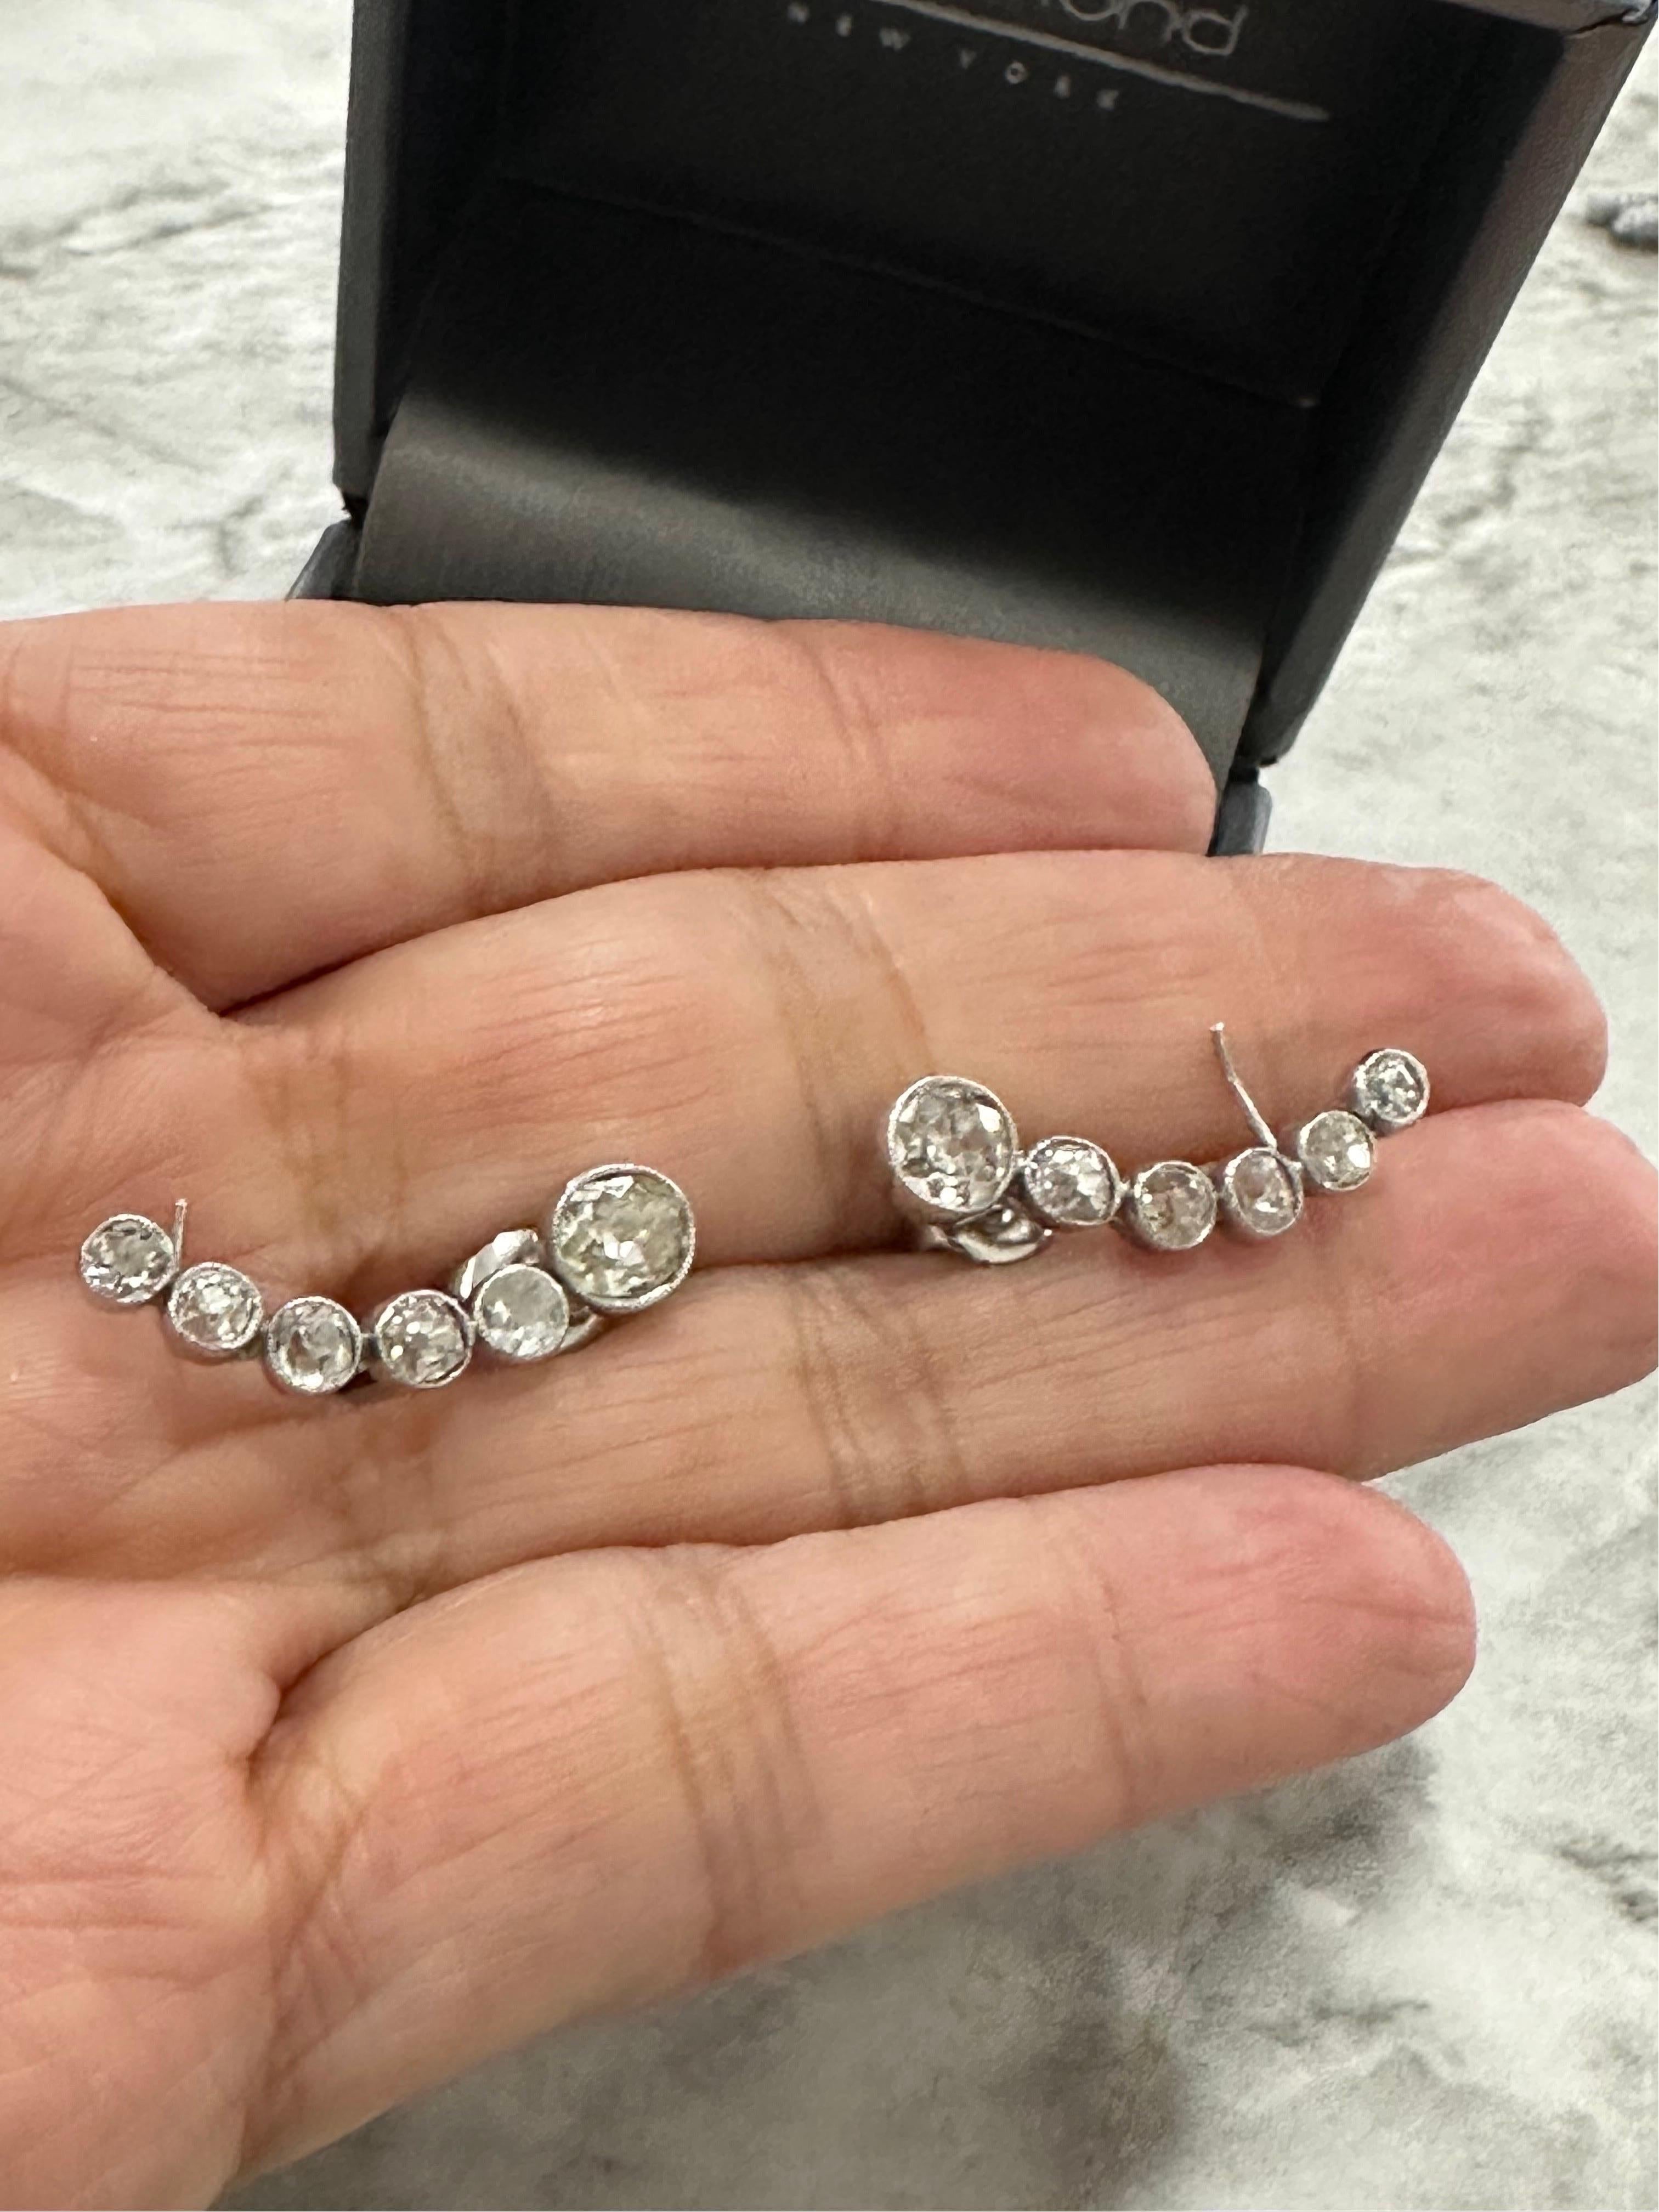 Platimum bezel set old mine Diamonds ear cuffs are right on trend!
Approx 2.40Carat diamonds
F-J Color
VS2-I1
Original Art Deco redesigned for Contempoary wear.